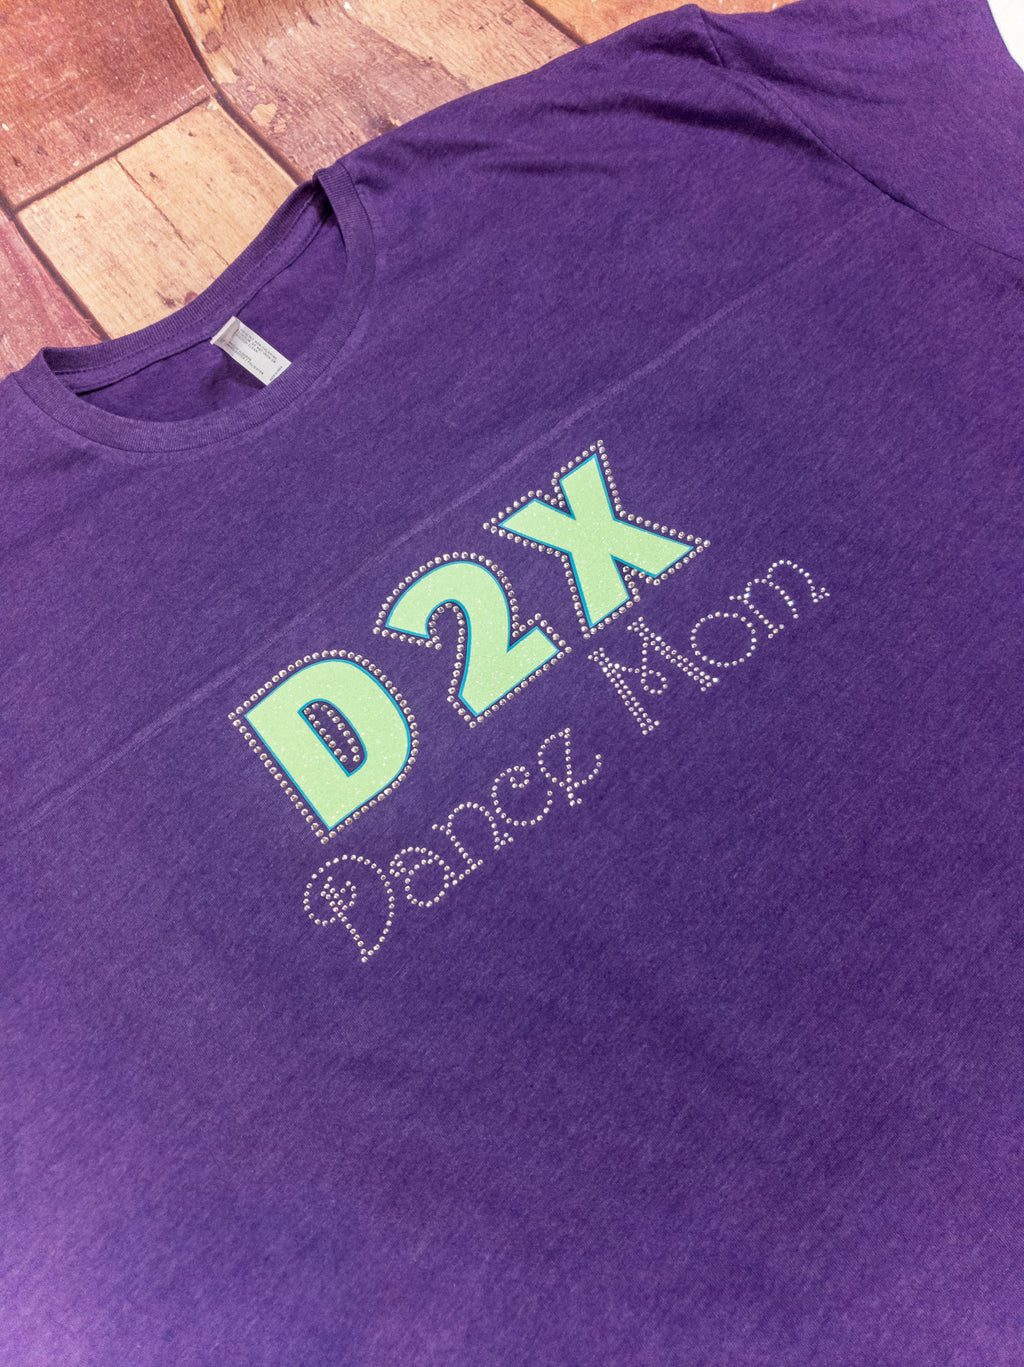 D2X Dance Mom Rhinestone  Purple Jersey Tee